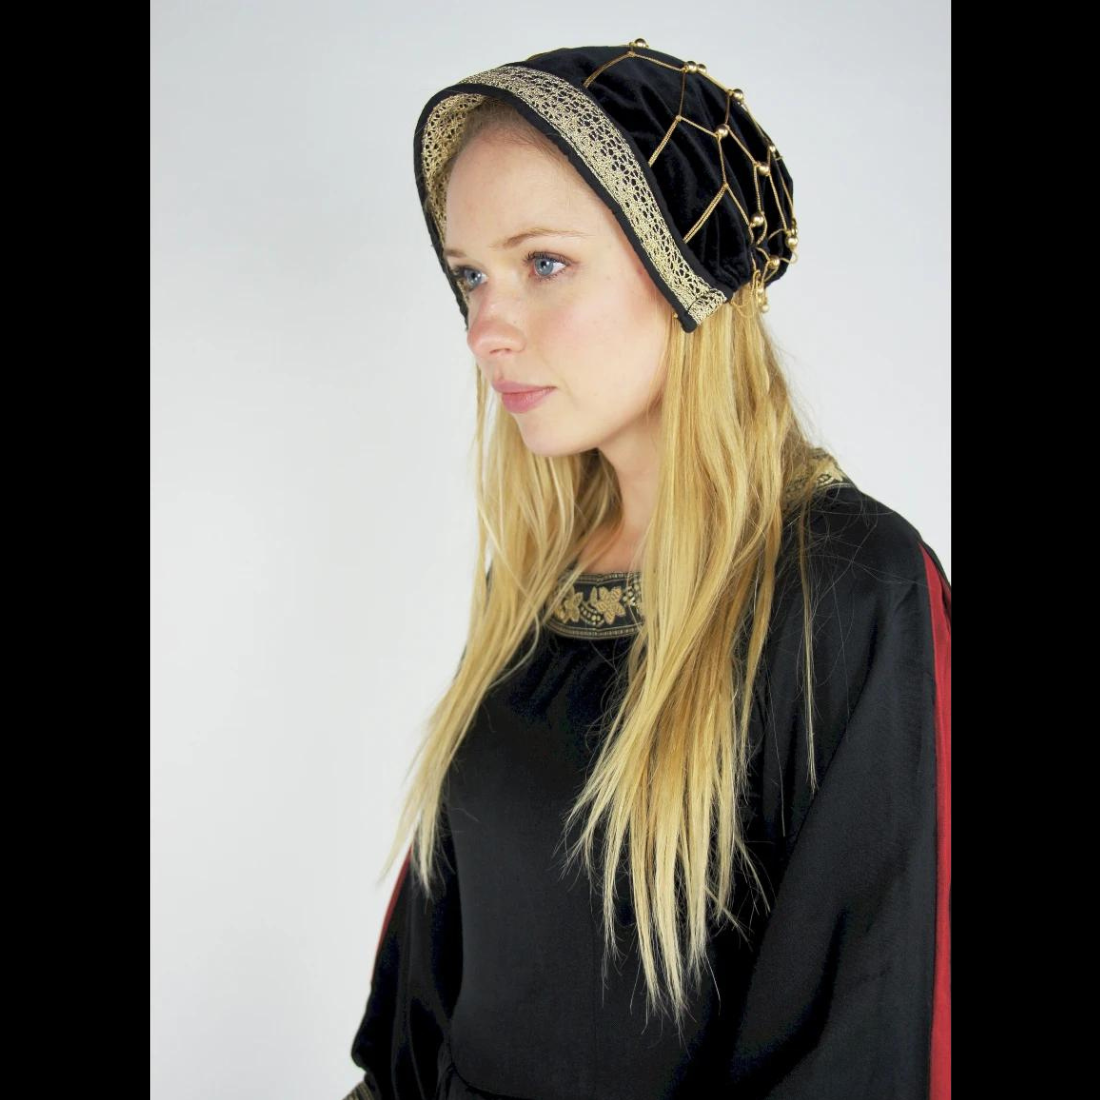 Black & Gold Velvet Renaissance Headwear with Beaded Drapery | Sophisticated Historical Accessory